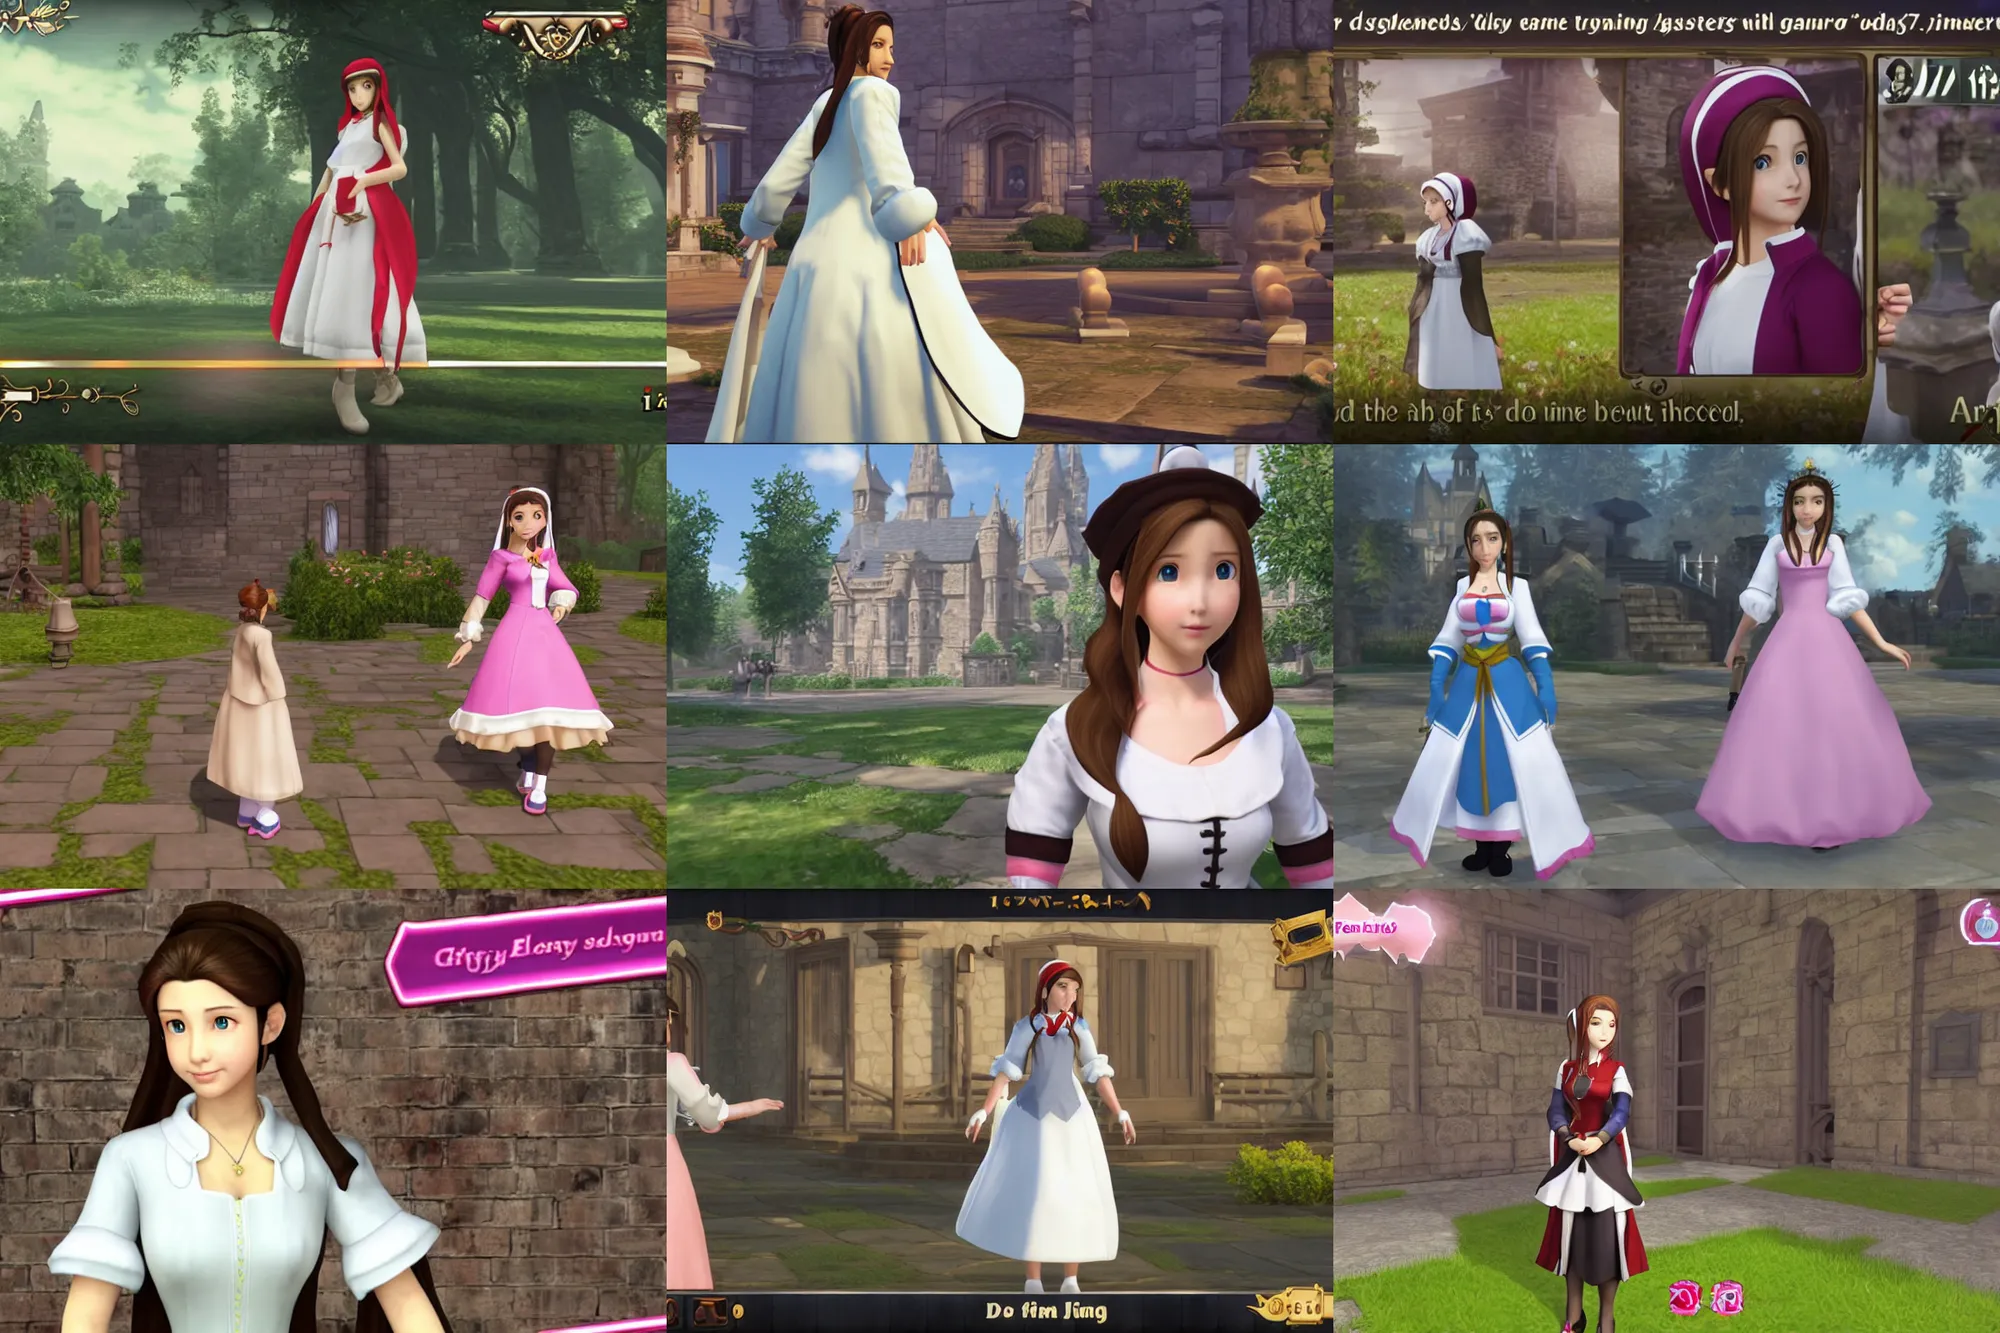 Prompt: Aerith gainsborough dressed as a nun, in game screenshot, hq